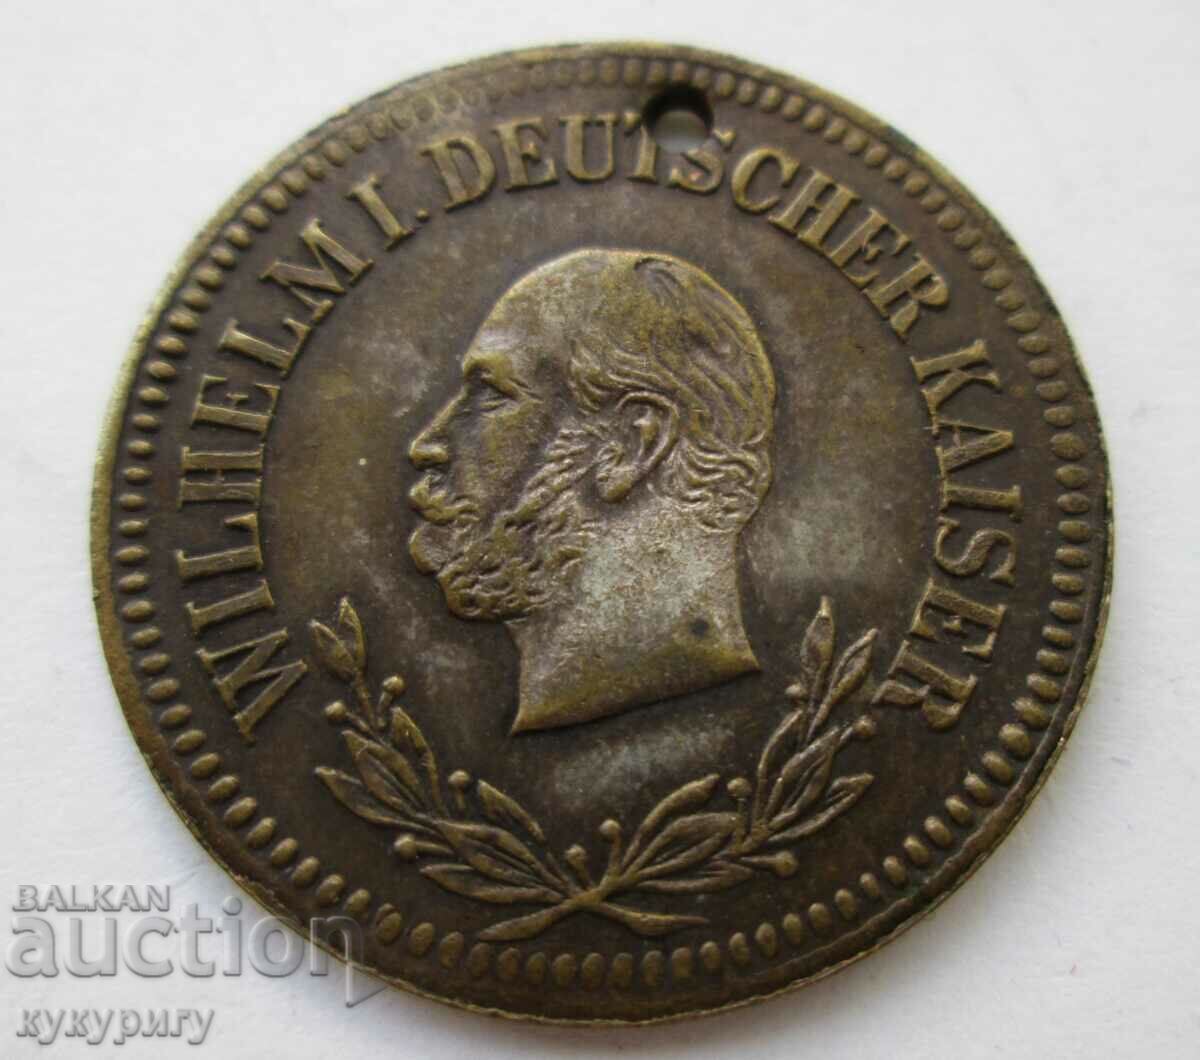 Old German medal token Wilhelm I and Wilhelm II